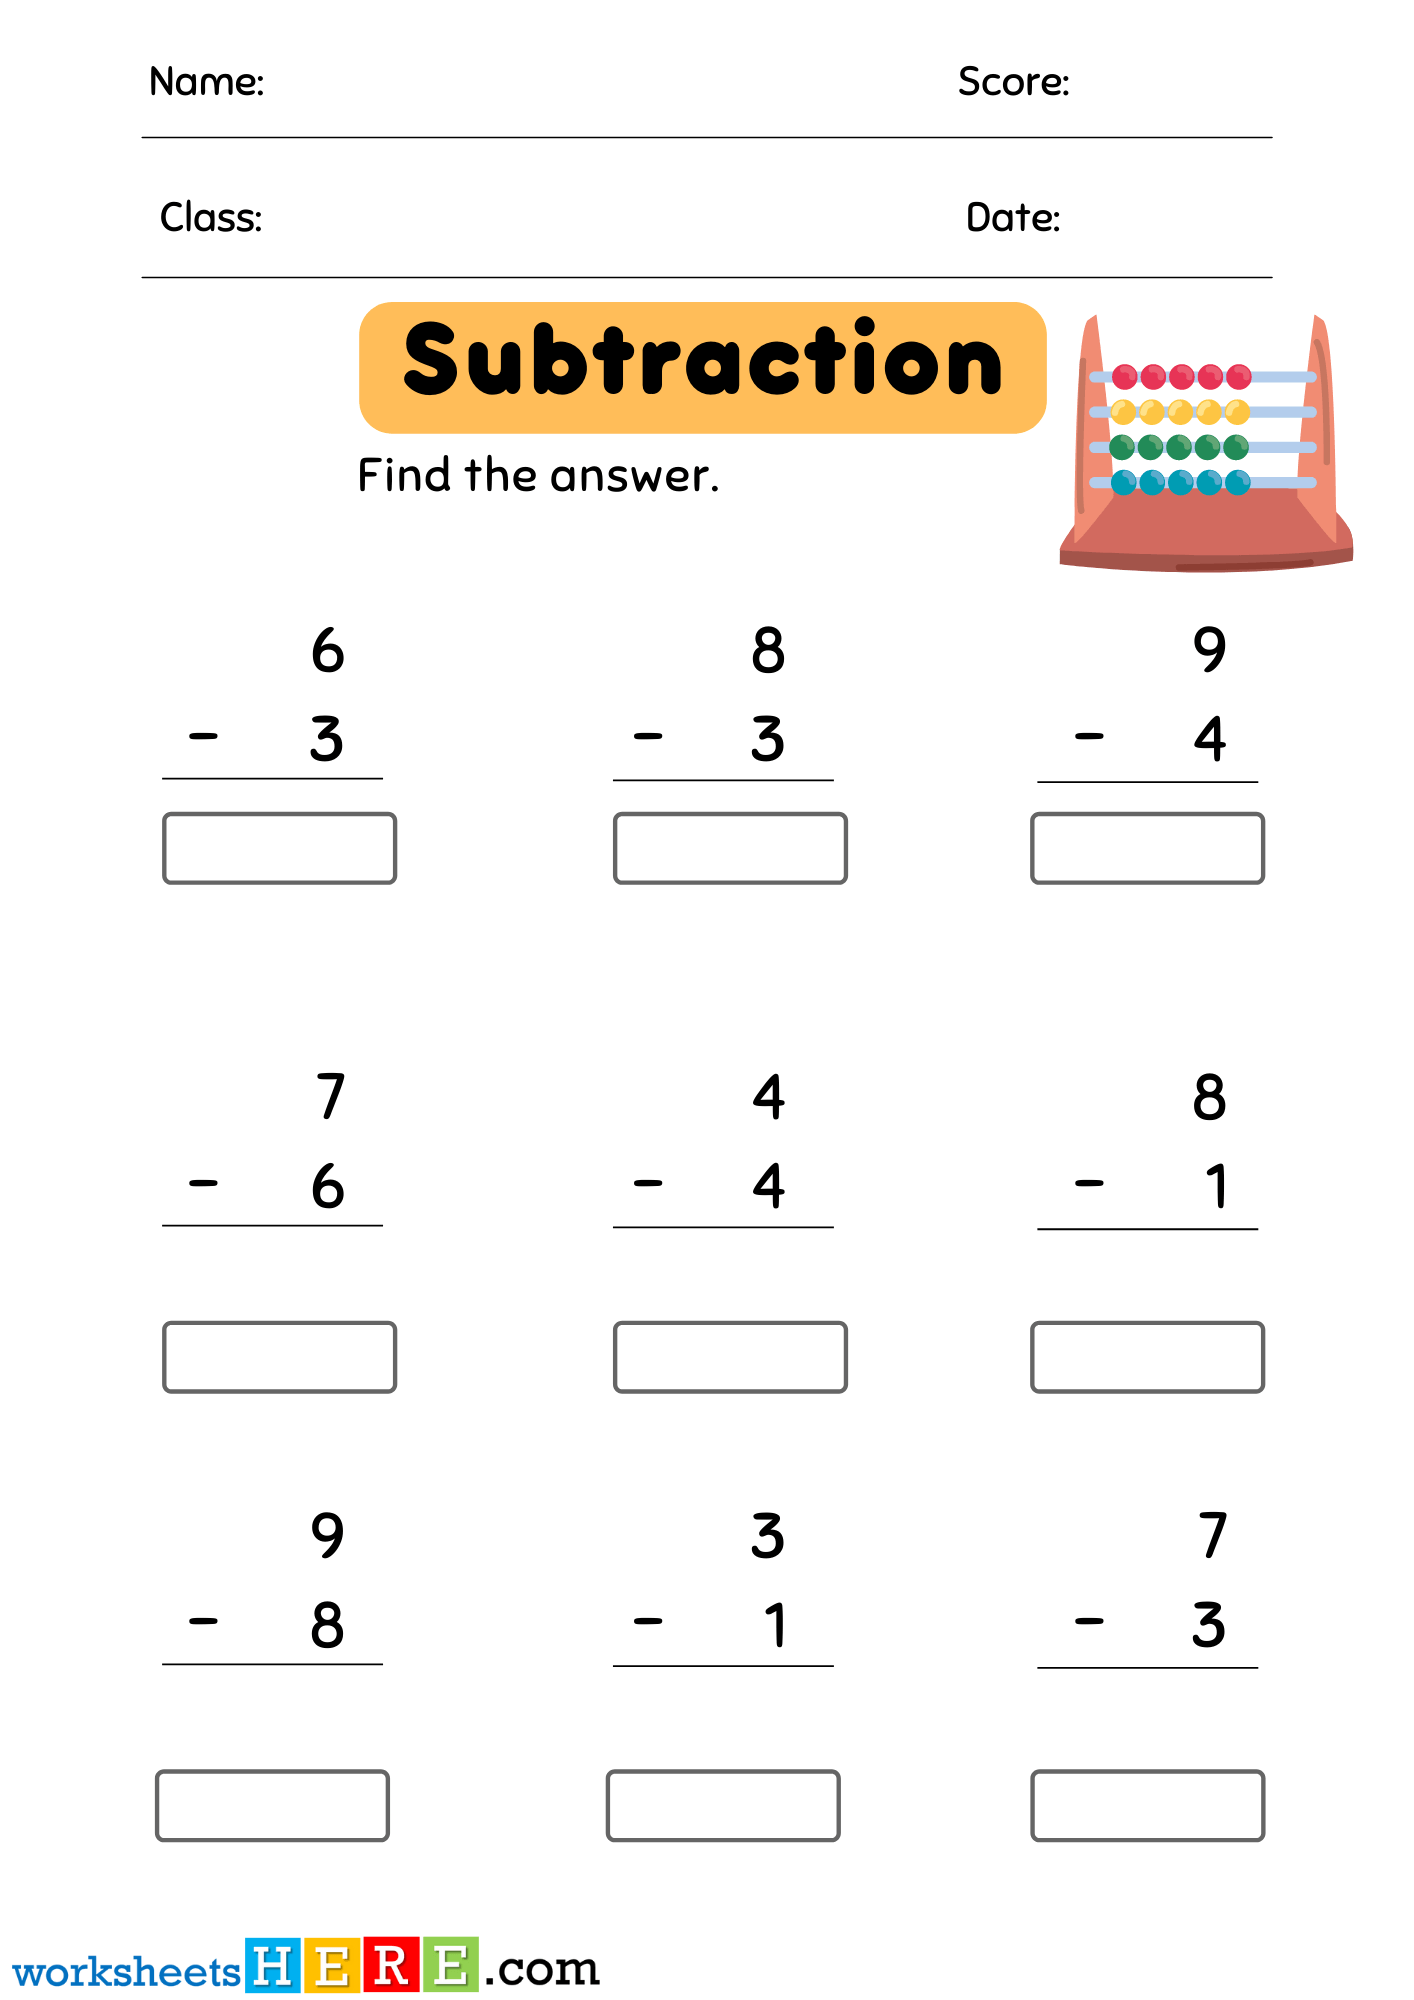 Subtraction Exercises Printable PDF Worksheet For Kids